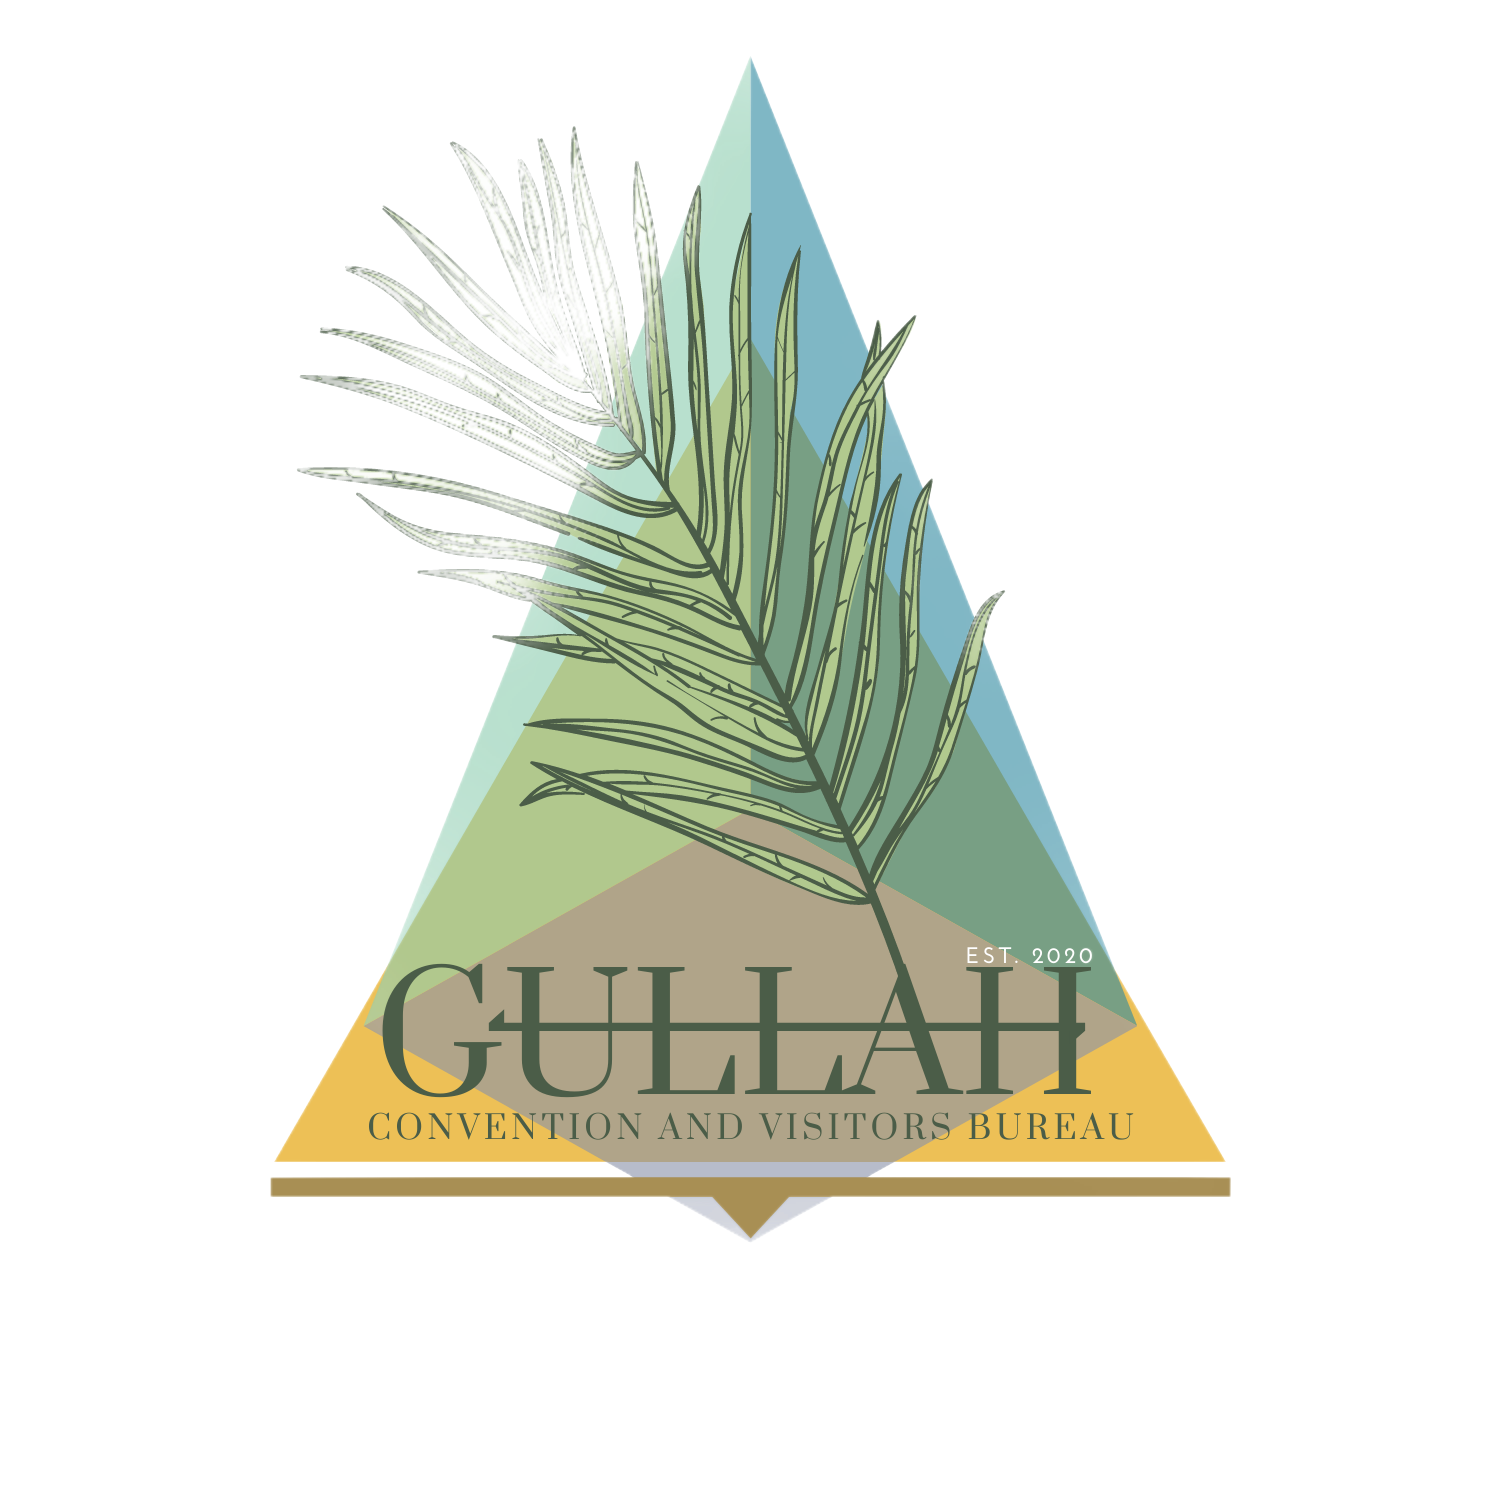 Gullah Convention and Visitors Bureau